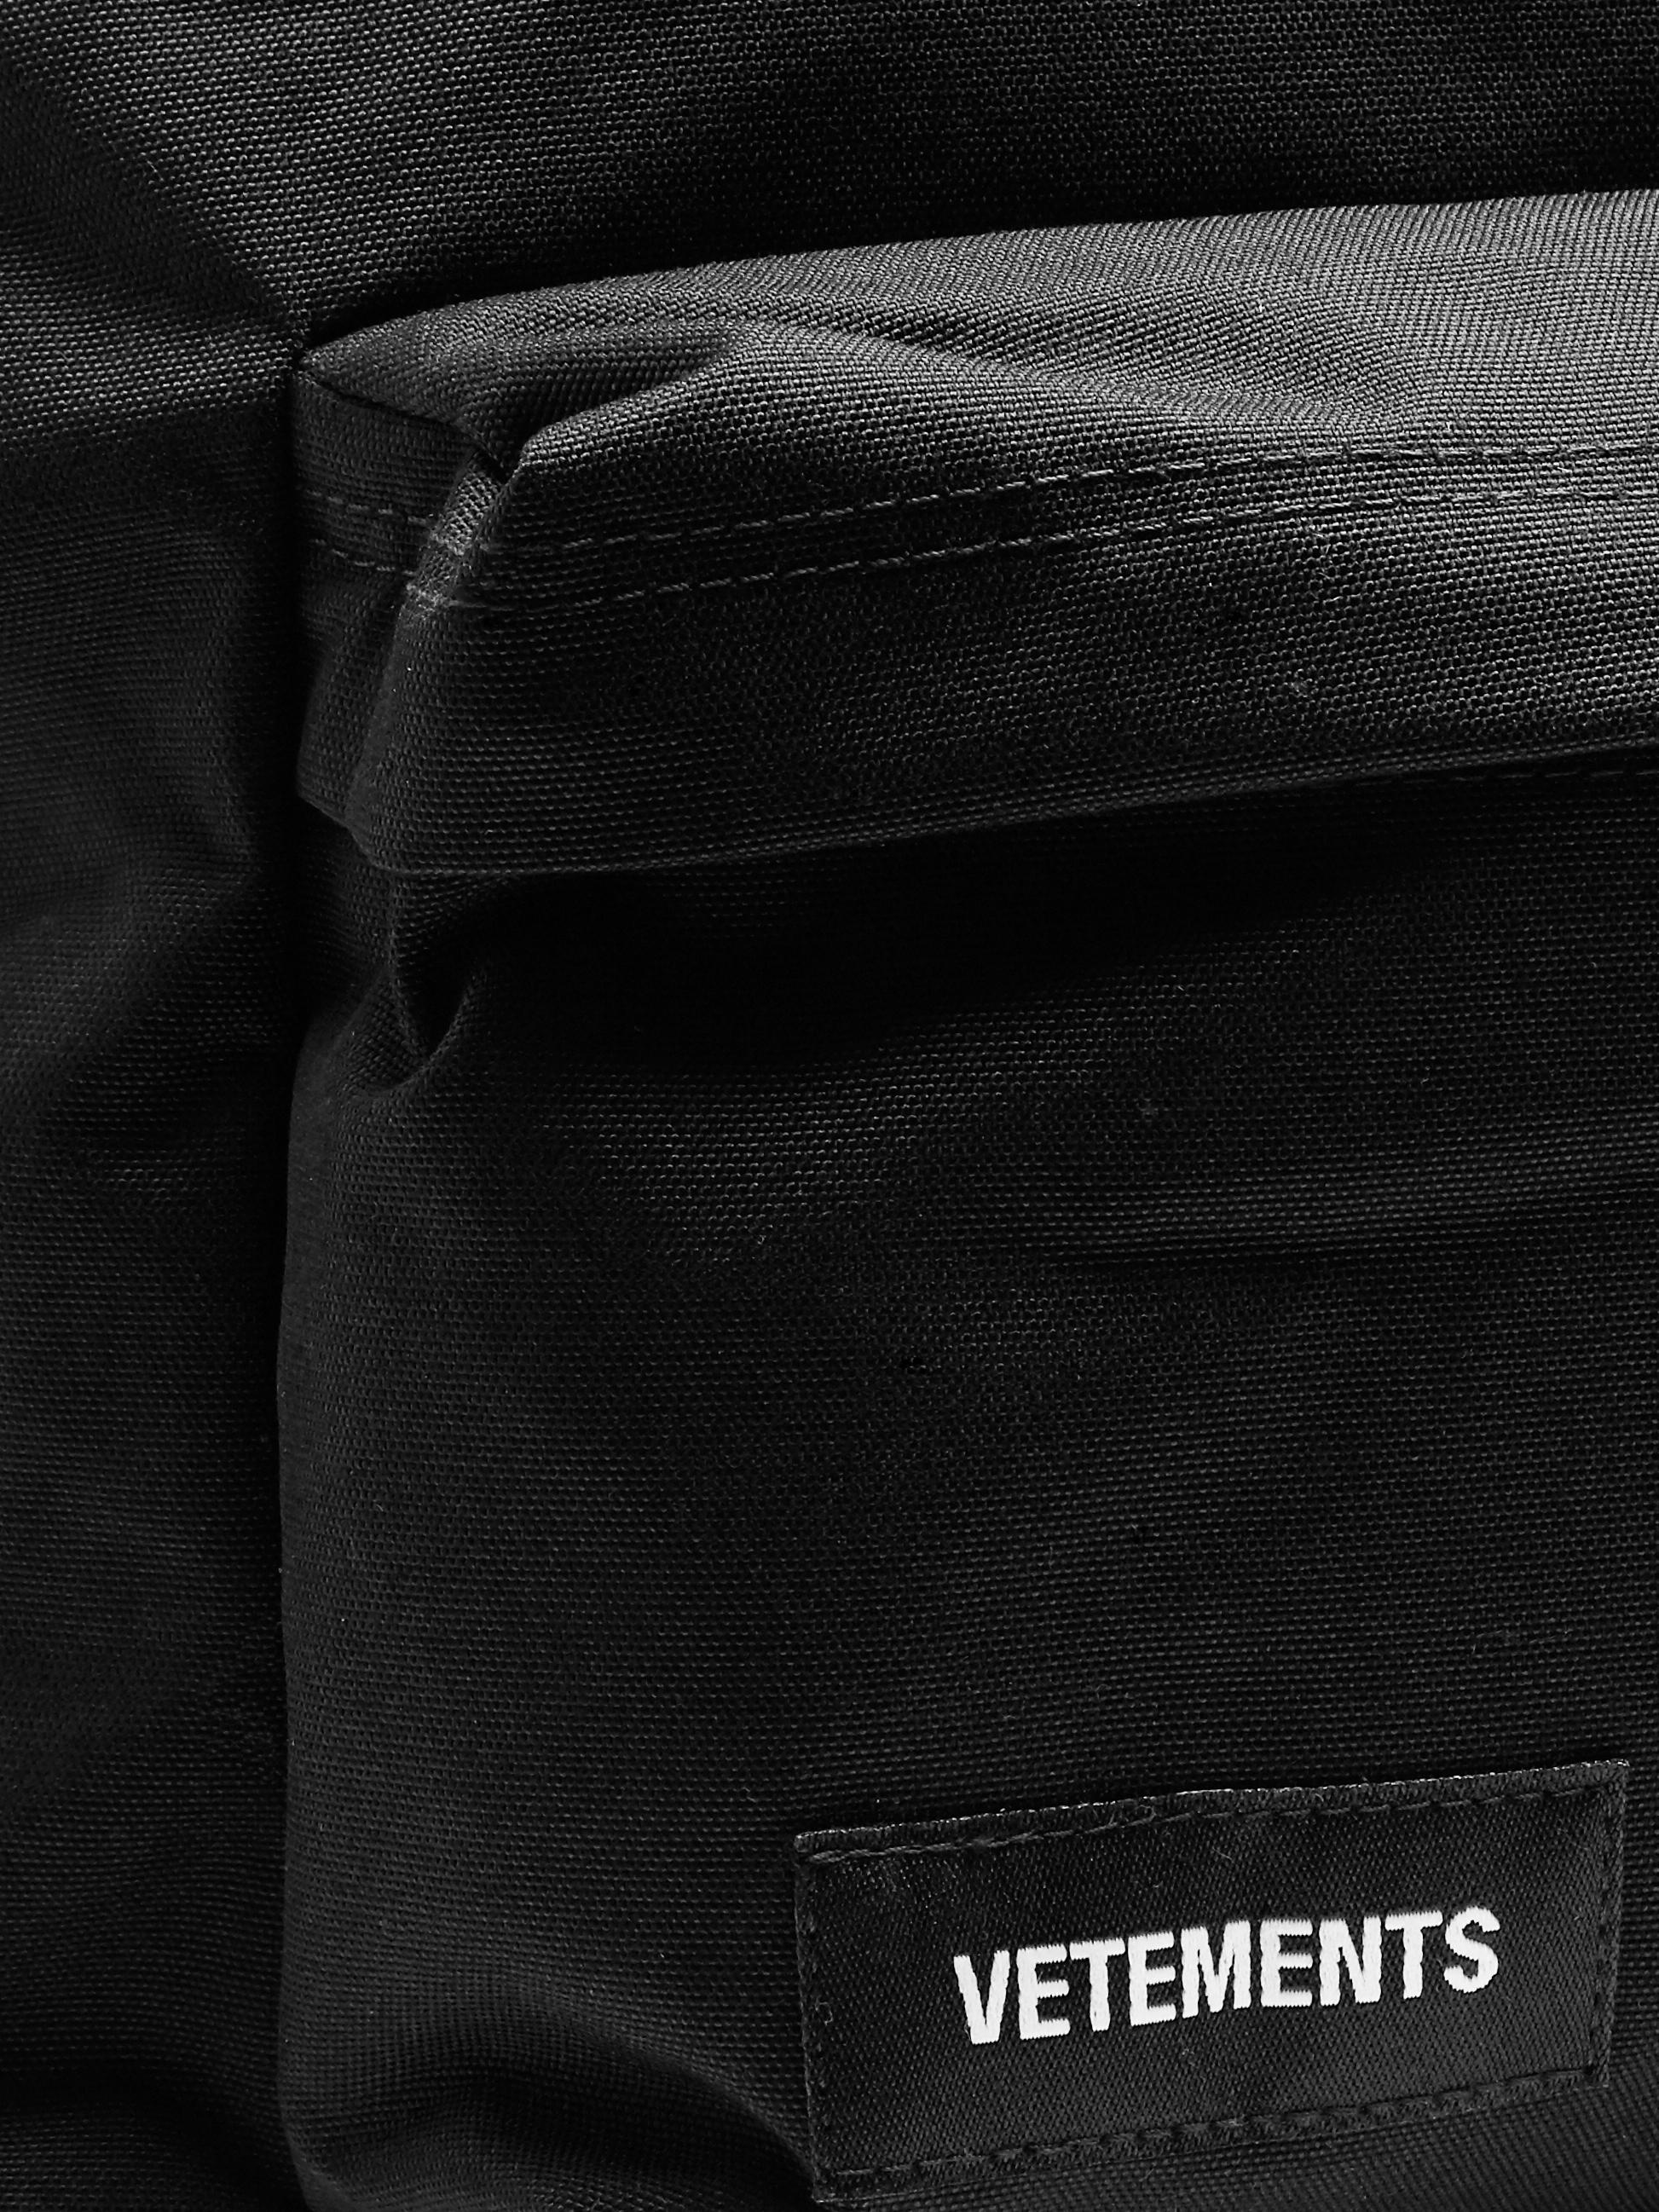 Vetements X Eastpak Oversized Canvas Backpack in Black for Men | Lyst